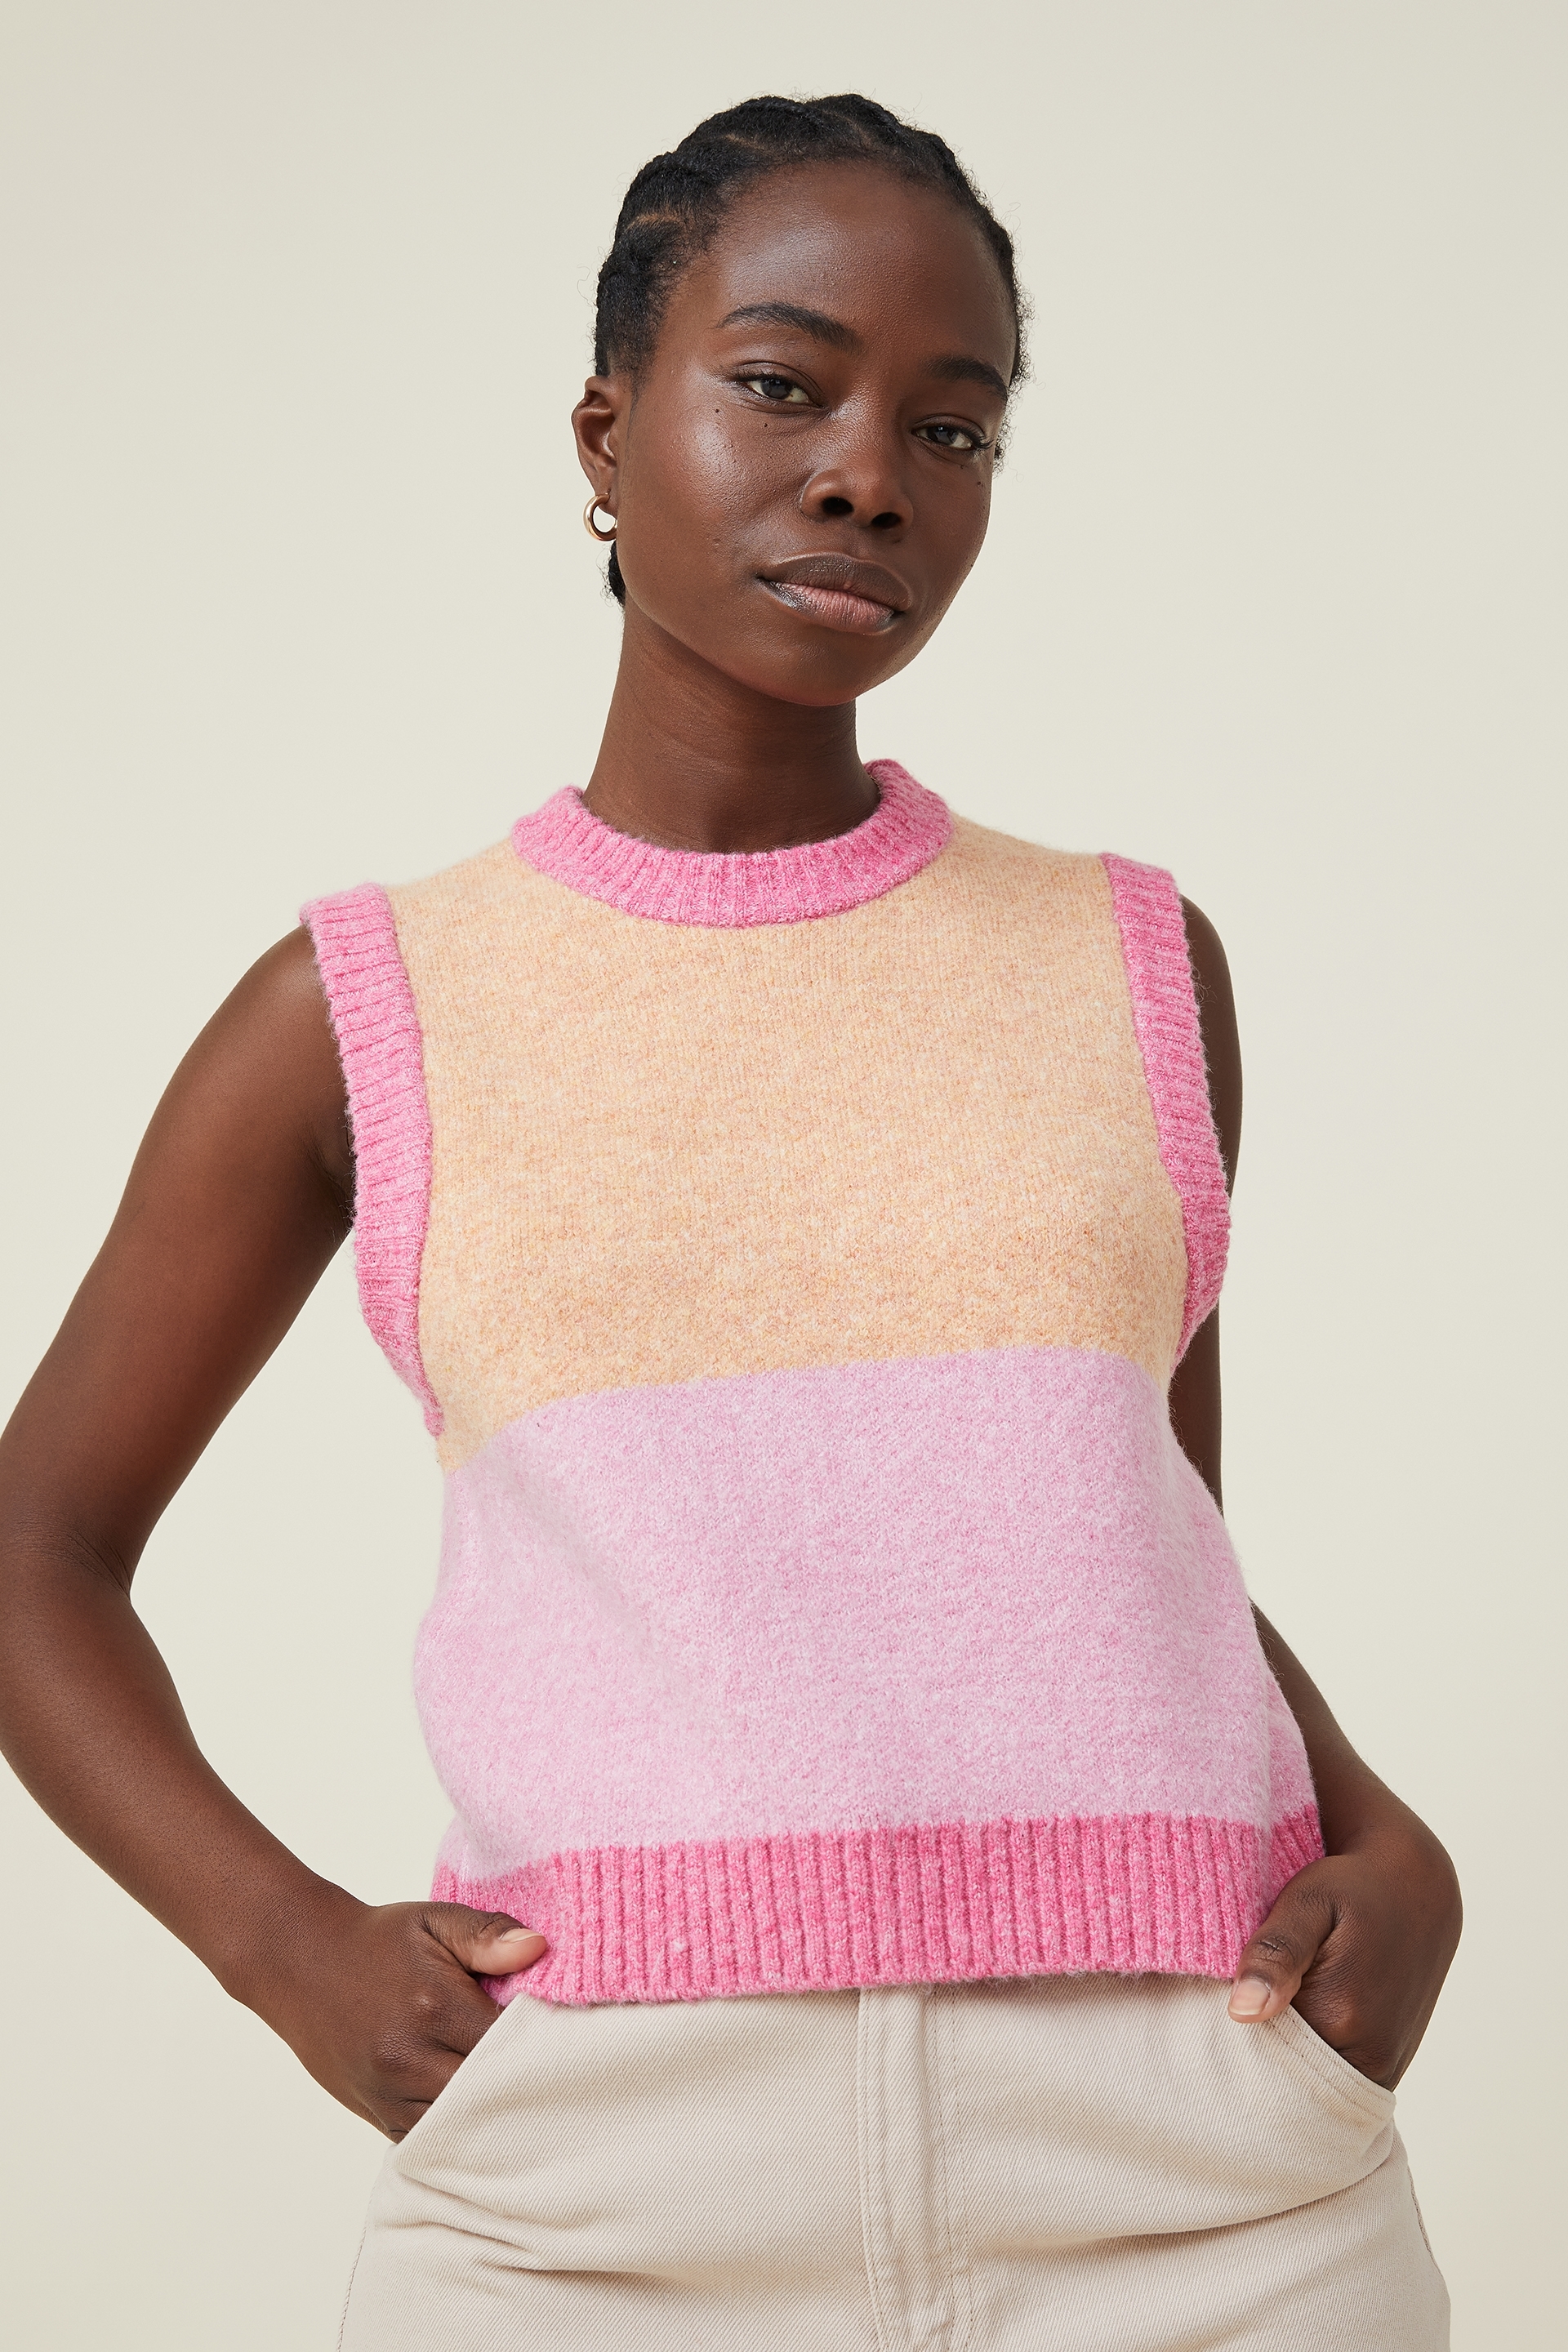 Cotton On Women - Colour Block Vest - Raspberry pink/retro pink/spring peach colour